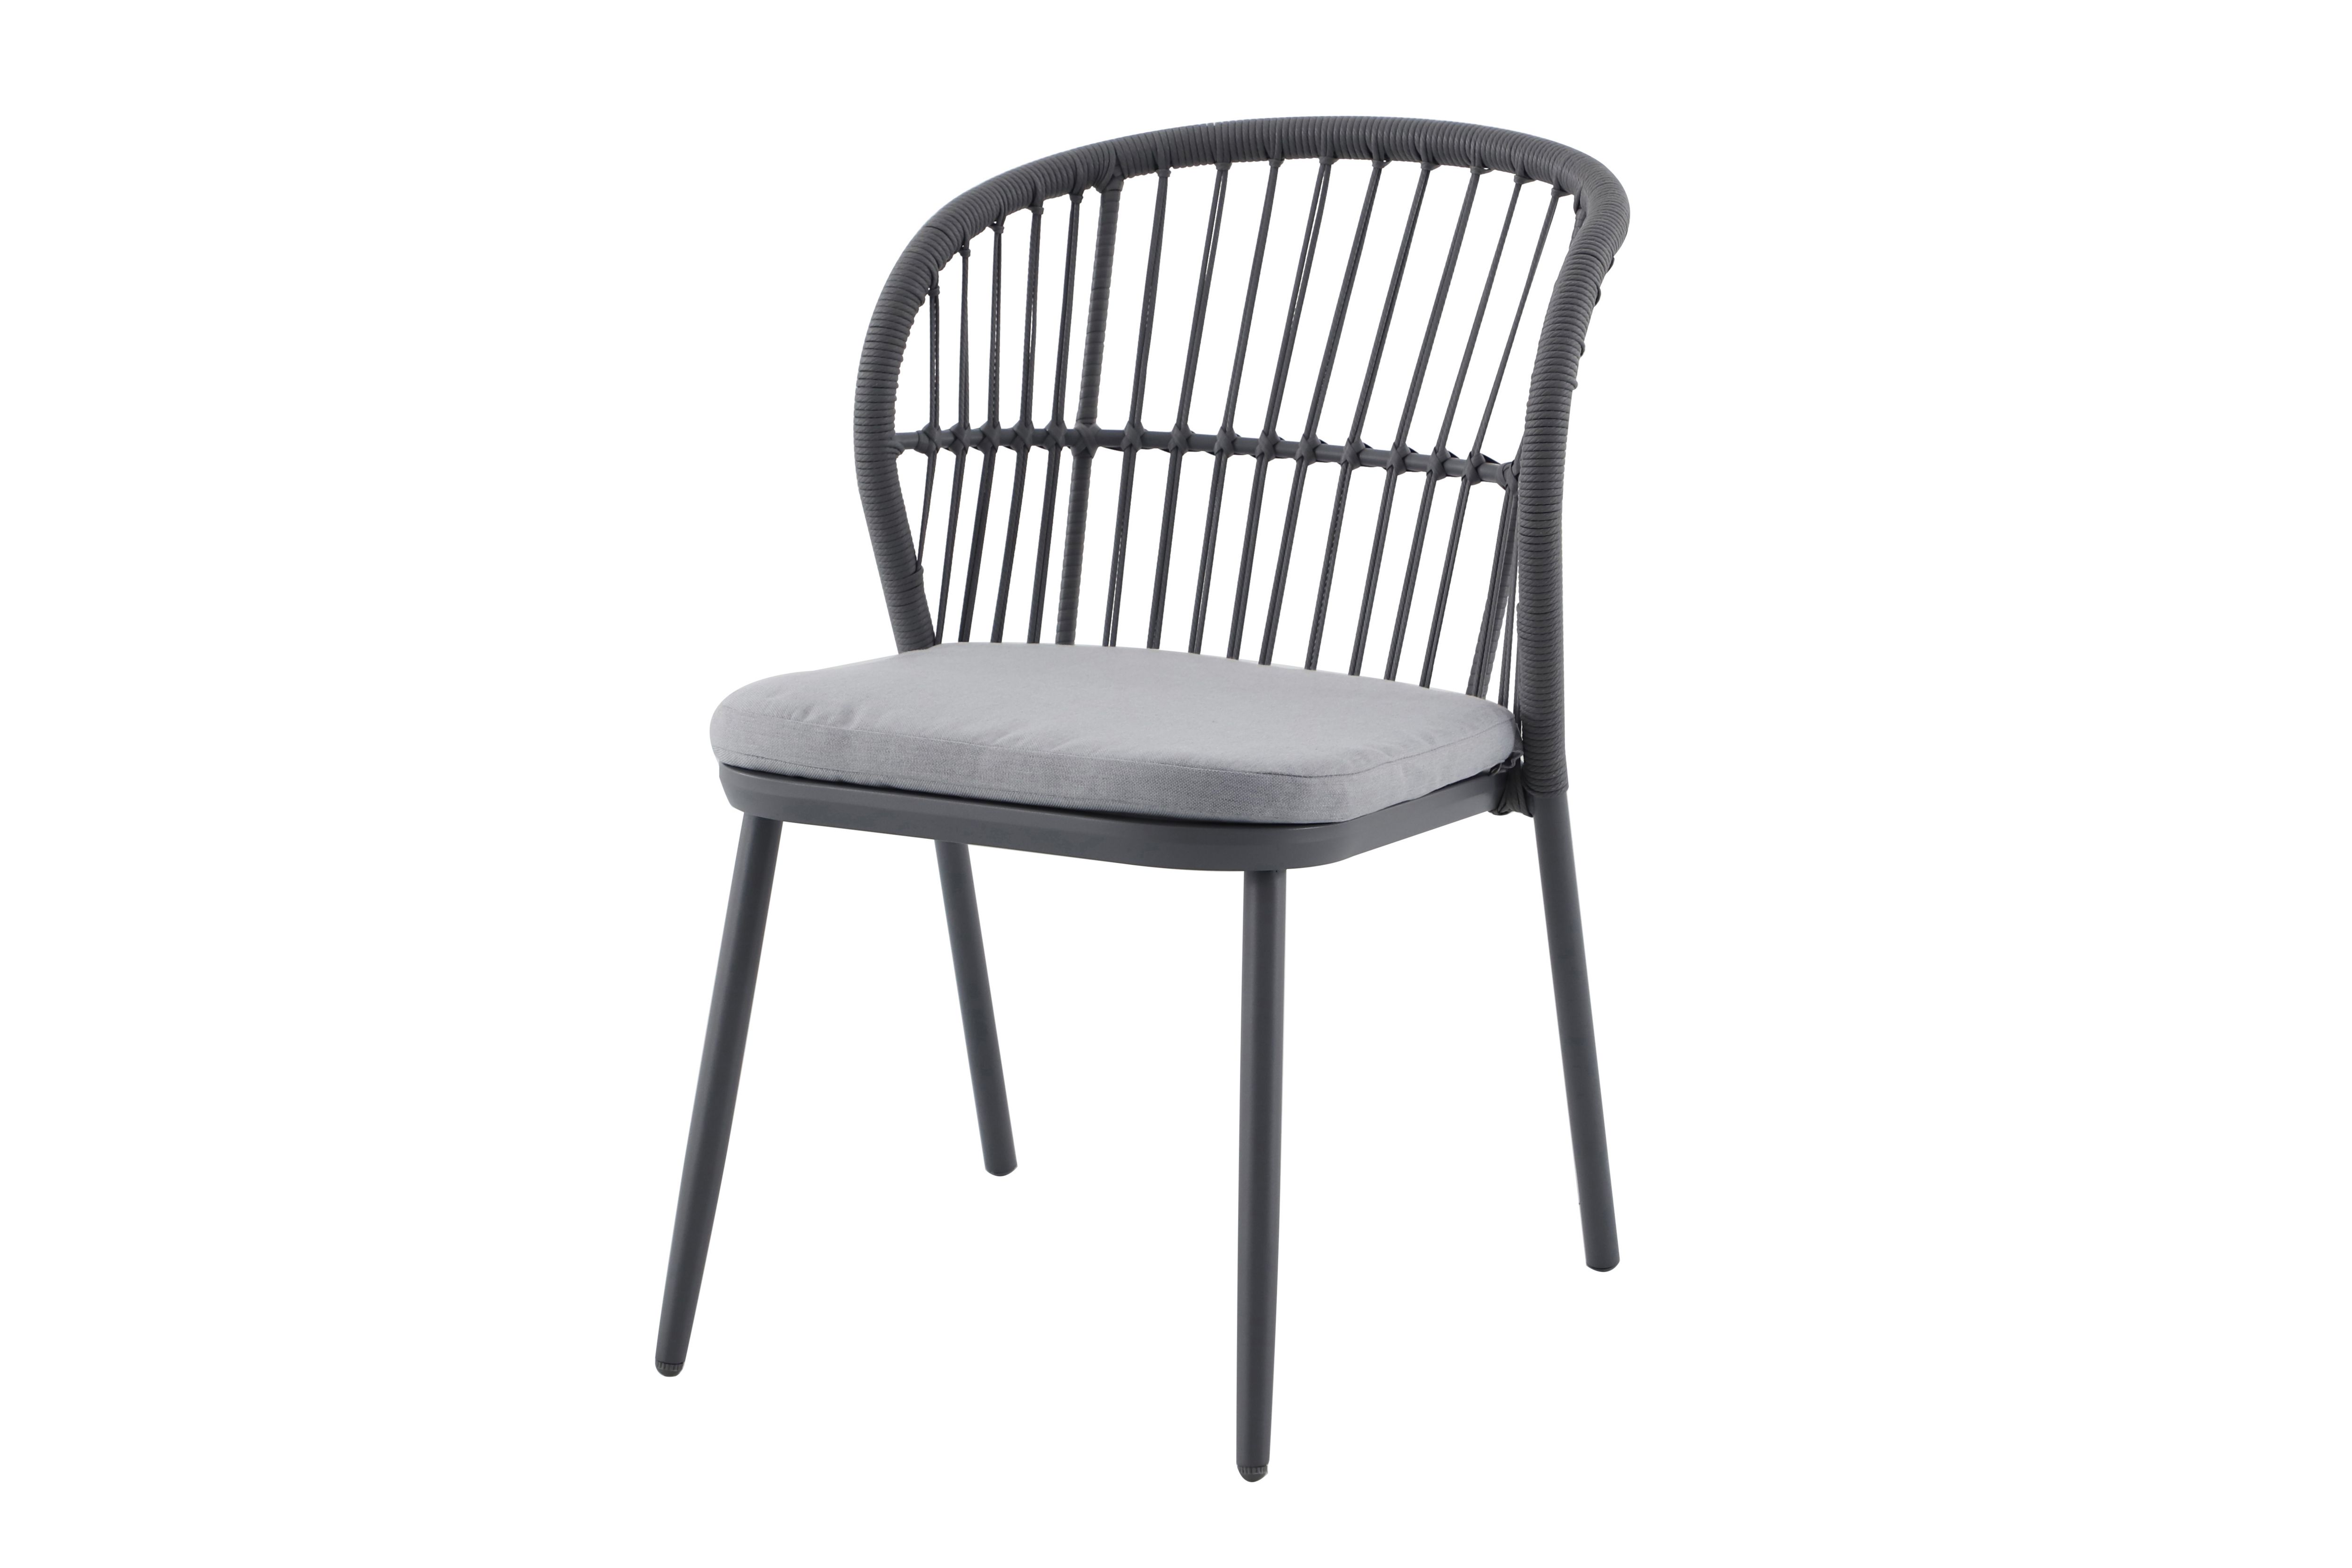 B&Q GoodHome Chair Apolima grey Steel at Metal | DIY